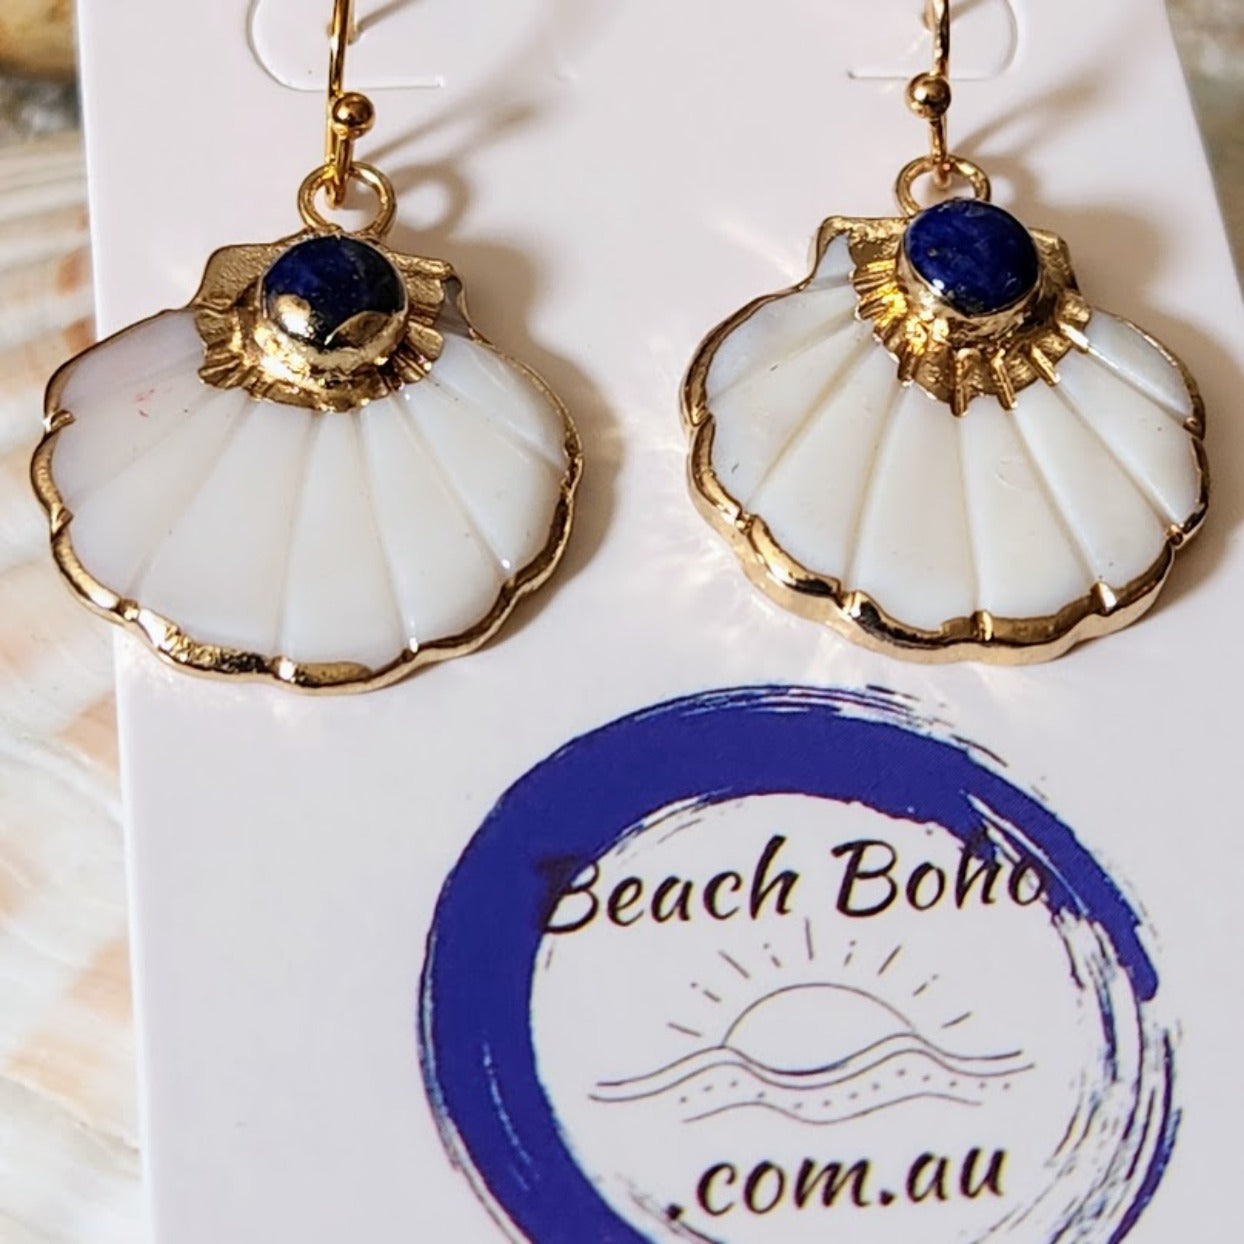 ROYAL BLUE WAVES - CARVED SHELL ELECTROPLATED HOOK EARRINGS - Premium earrings from www.beachboho.com.au - Just $40! Shop now at www.beachboho.com.au